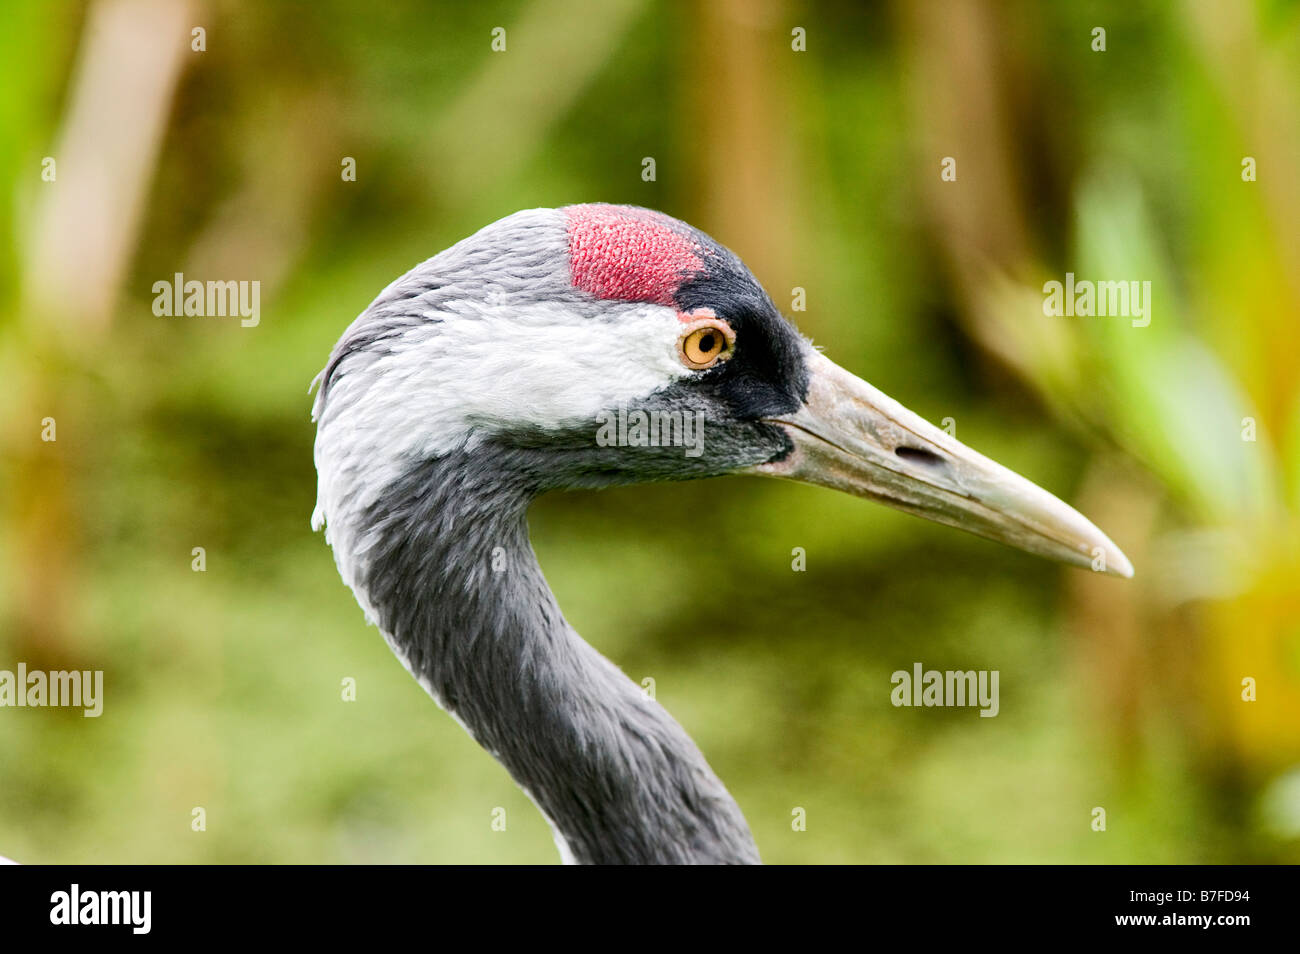 neck crane nature portrait bill animal bird Stock Photo